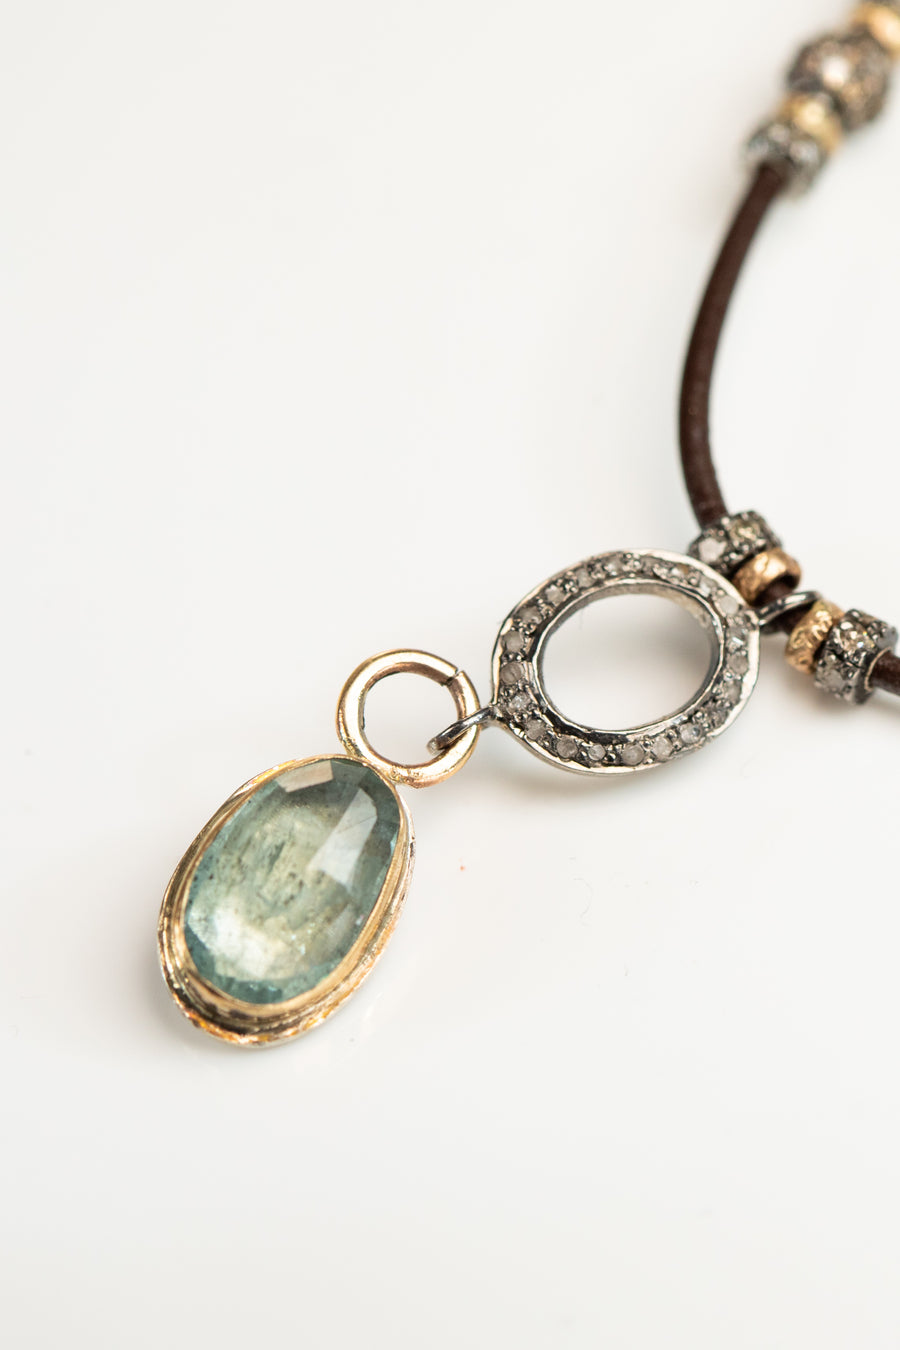 Moss Aquamarine and Pavé Diamond Necklace